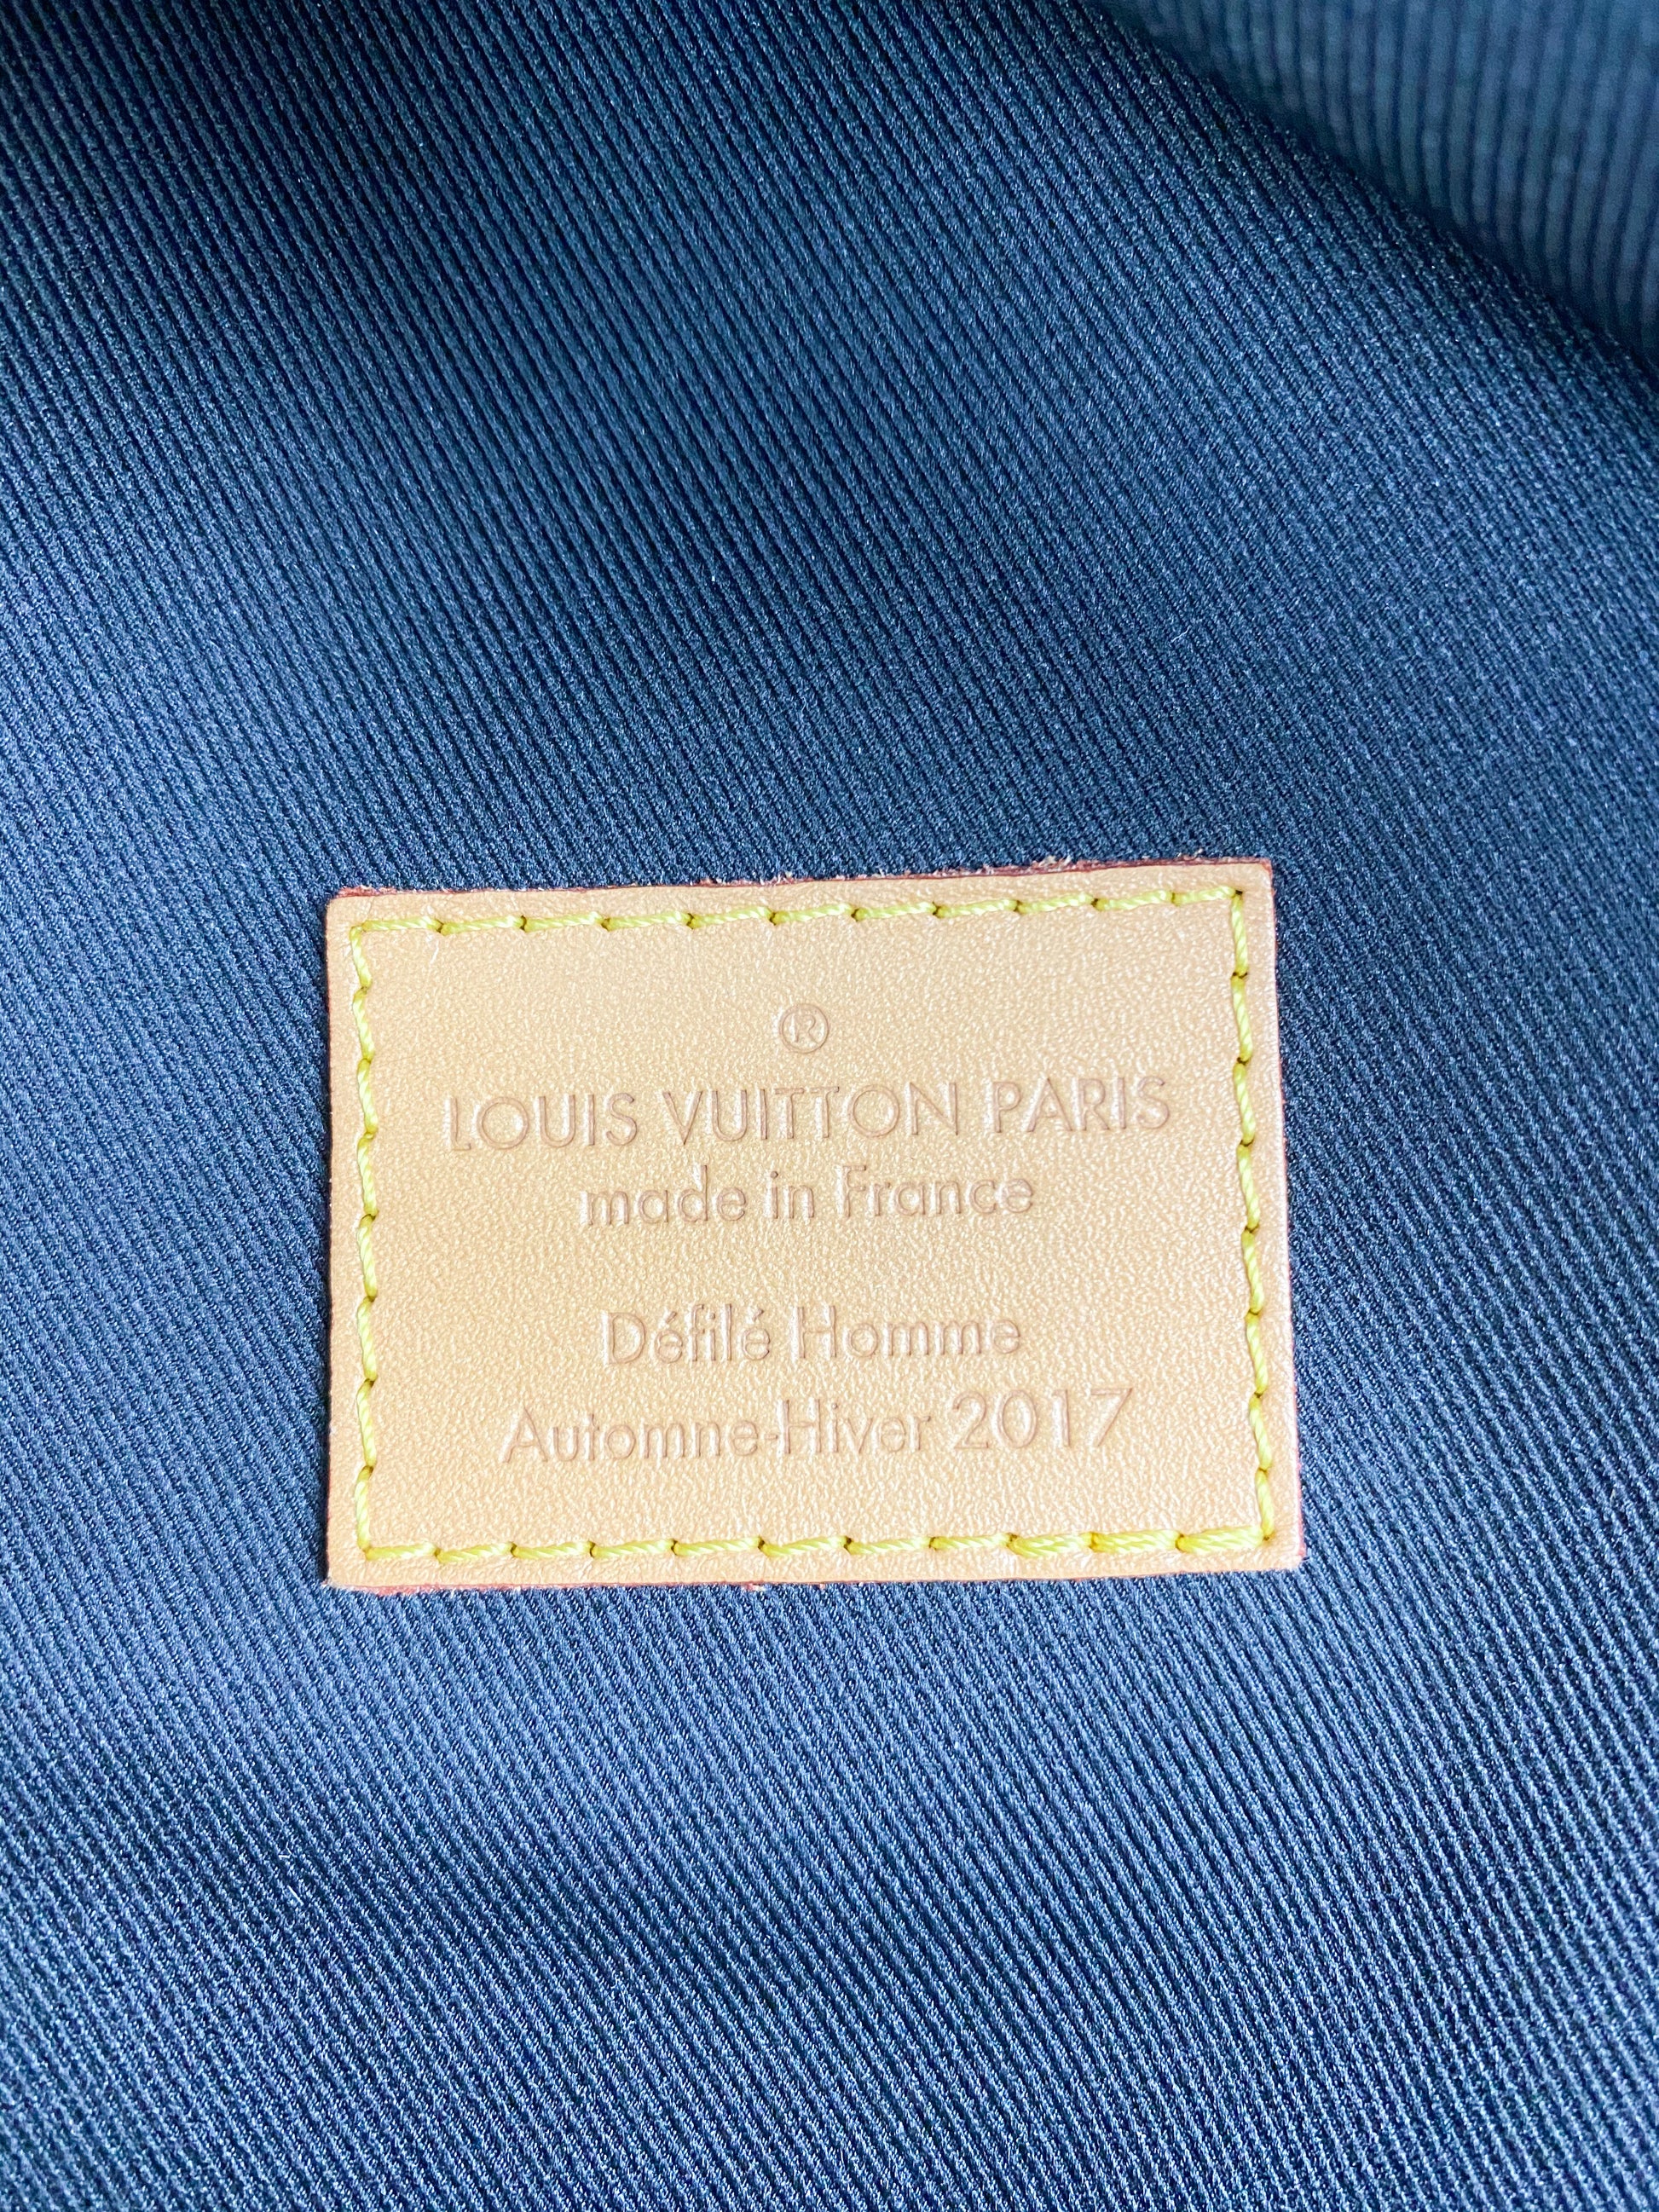 Supreme x Louis Vuitton Camo Apollo Backpack – Savonches